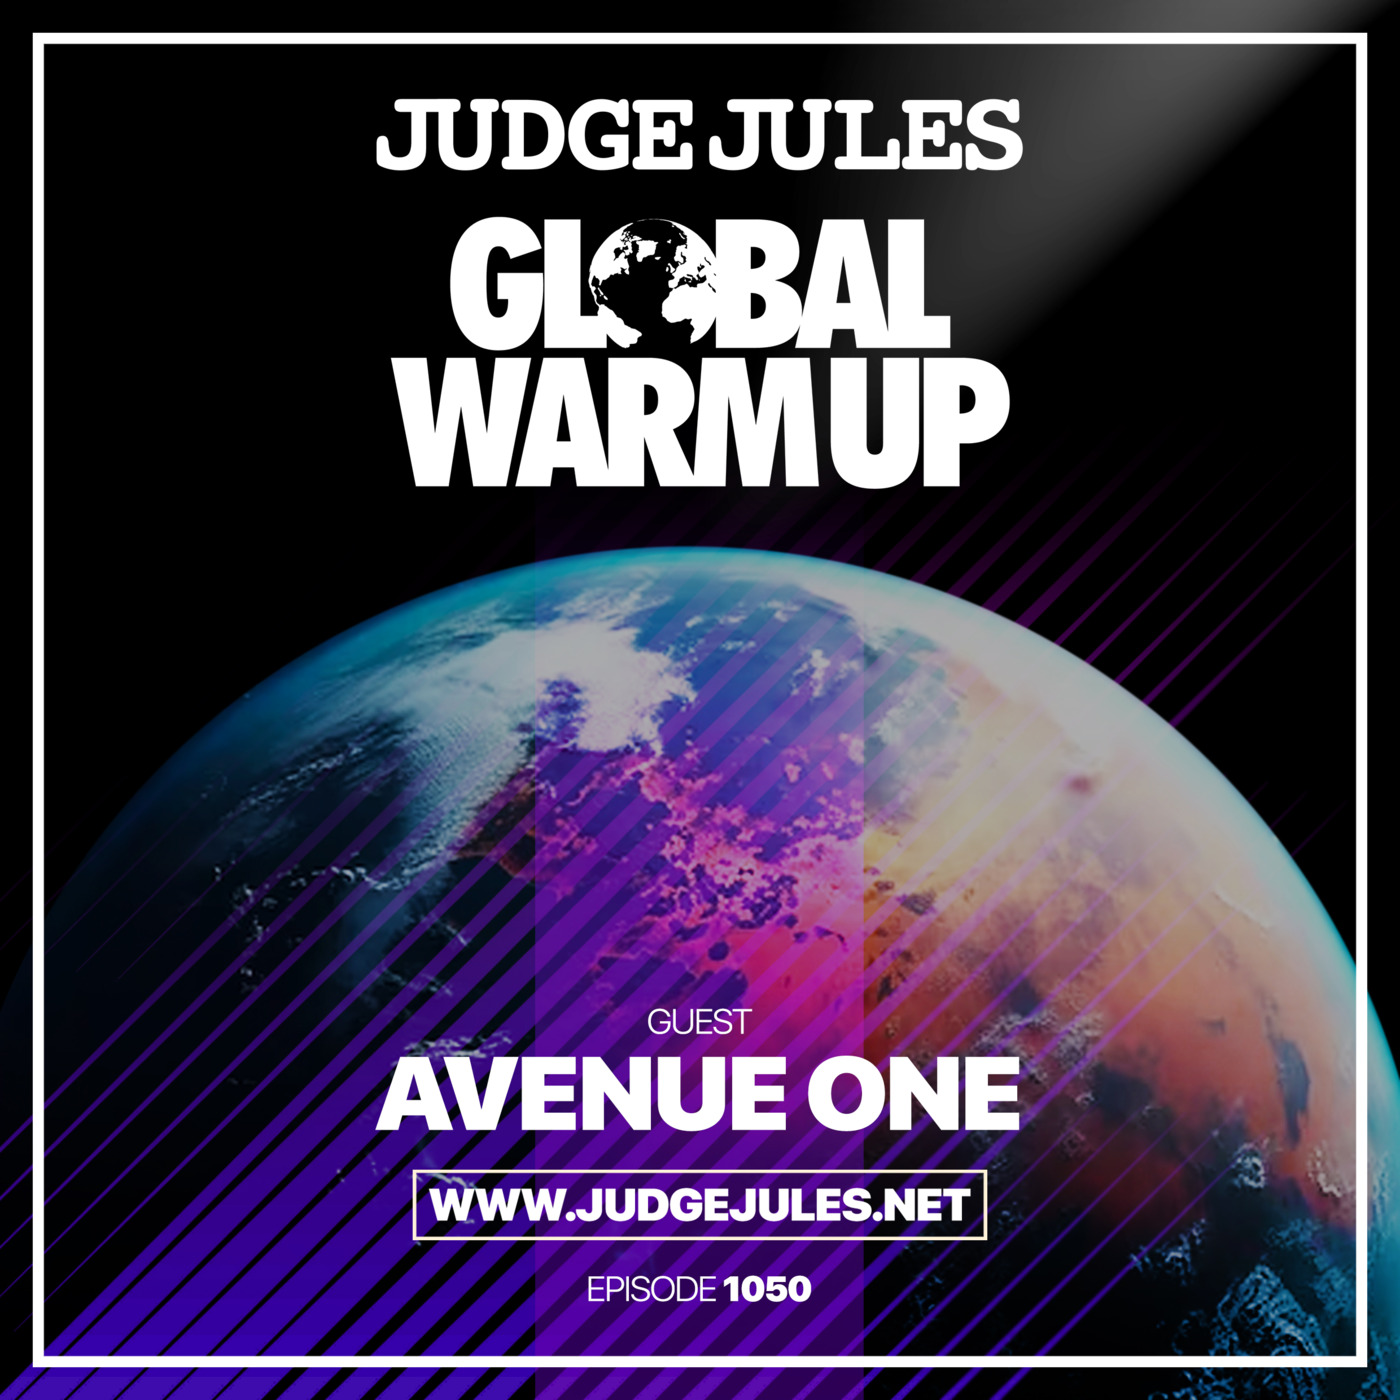 Episode 1050: JUDGE JULES PRESENTS THE GLOBAL WARM UP EPISODE 1050